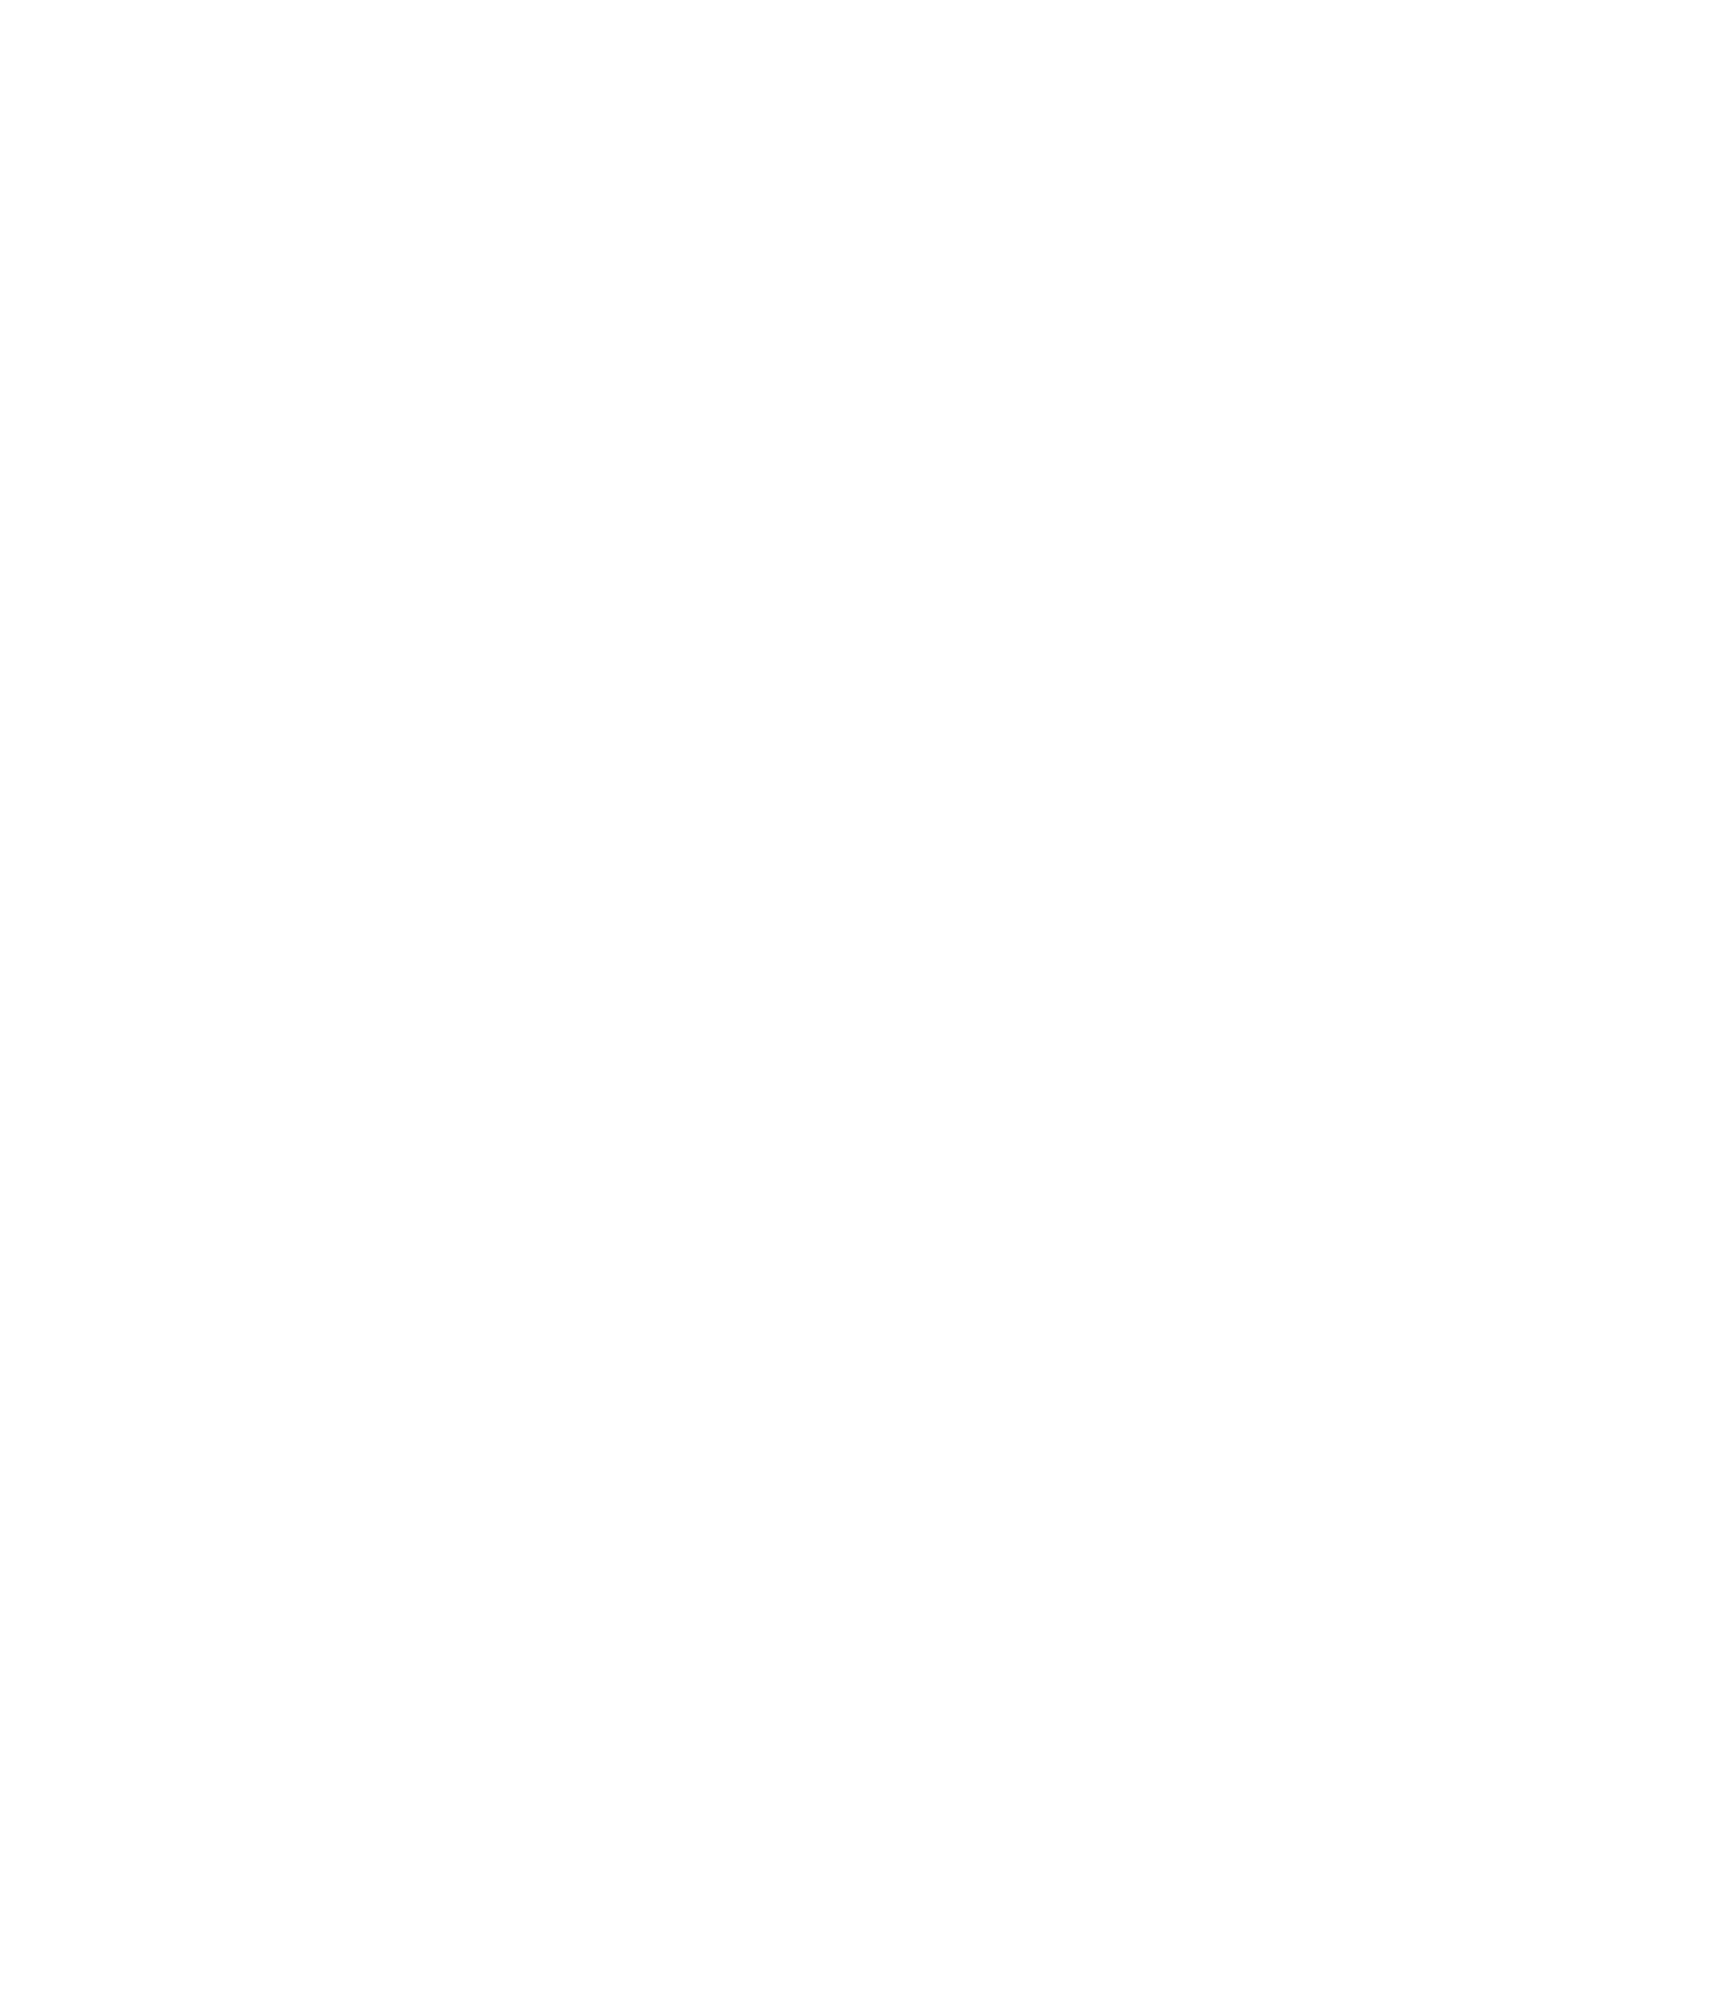 VPG Logo - VPG - Brandtree Creative